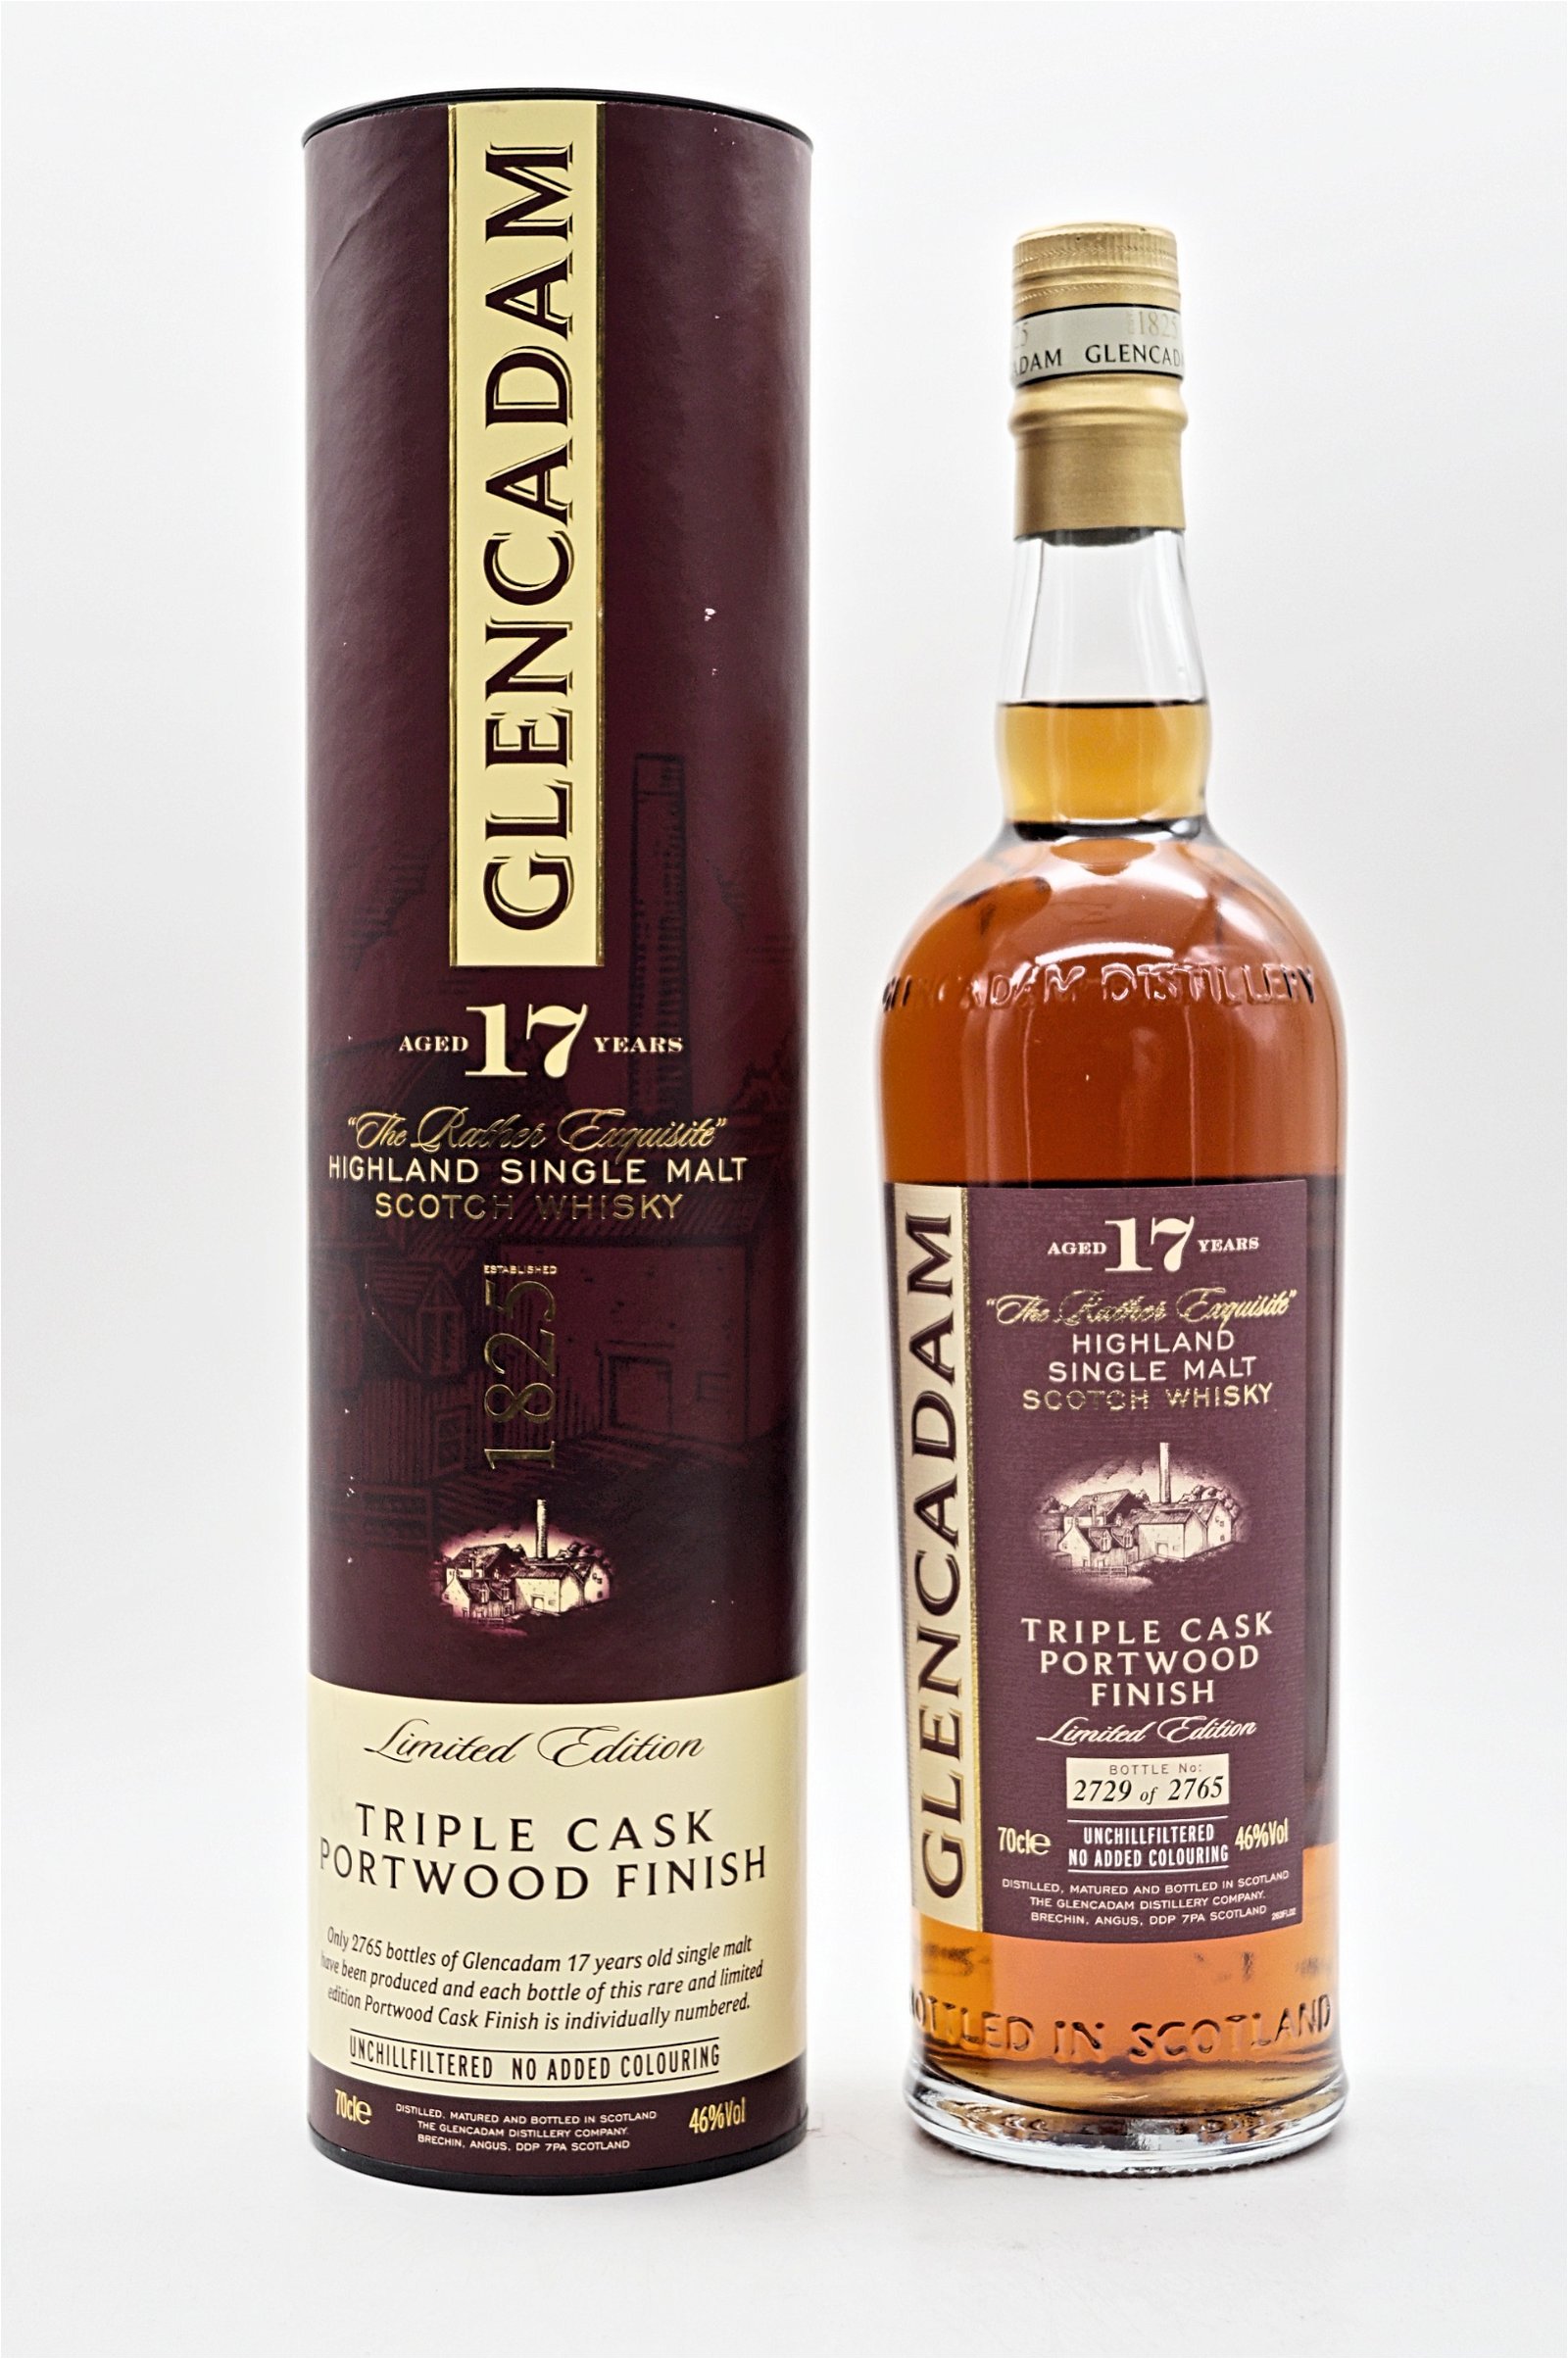 Glencadam 17 Jahre The Rather Exquisite Triple Cask Portwood Finish Highland Single Malt Scotch Whisky